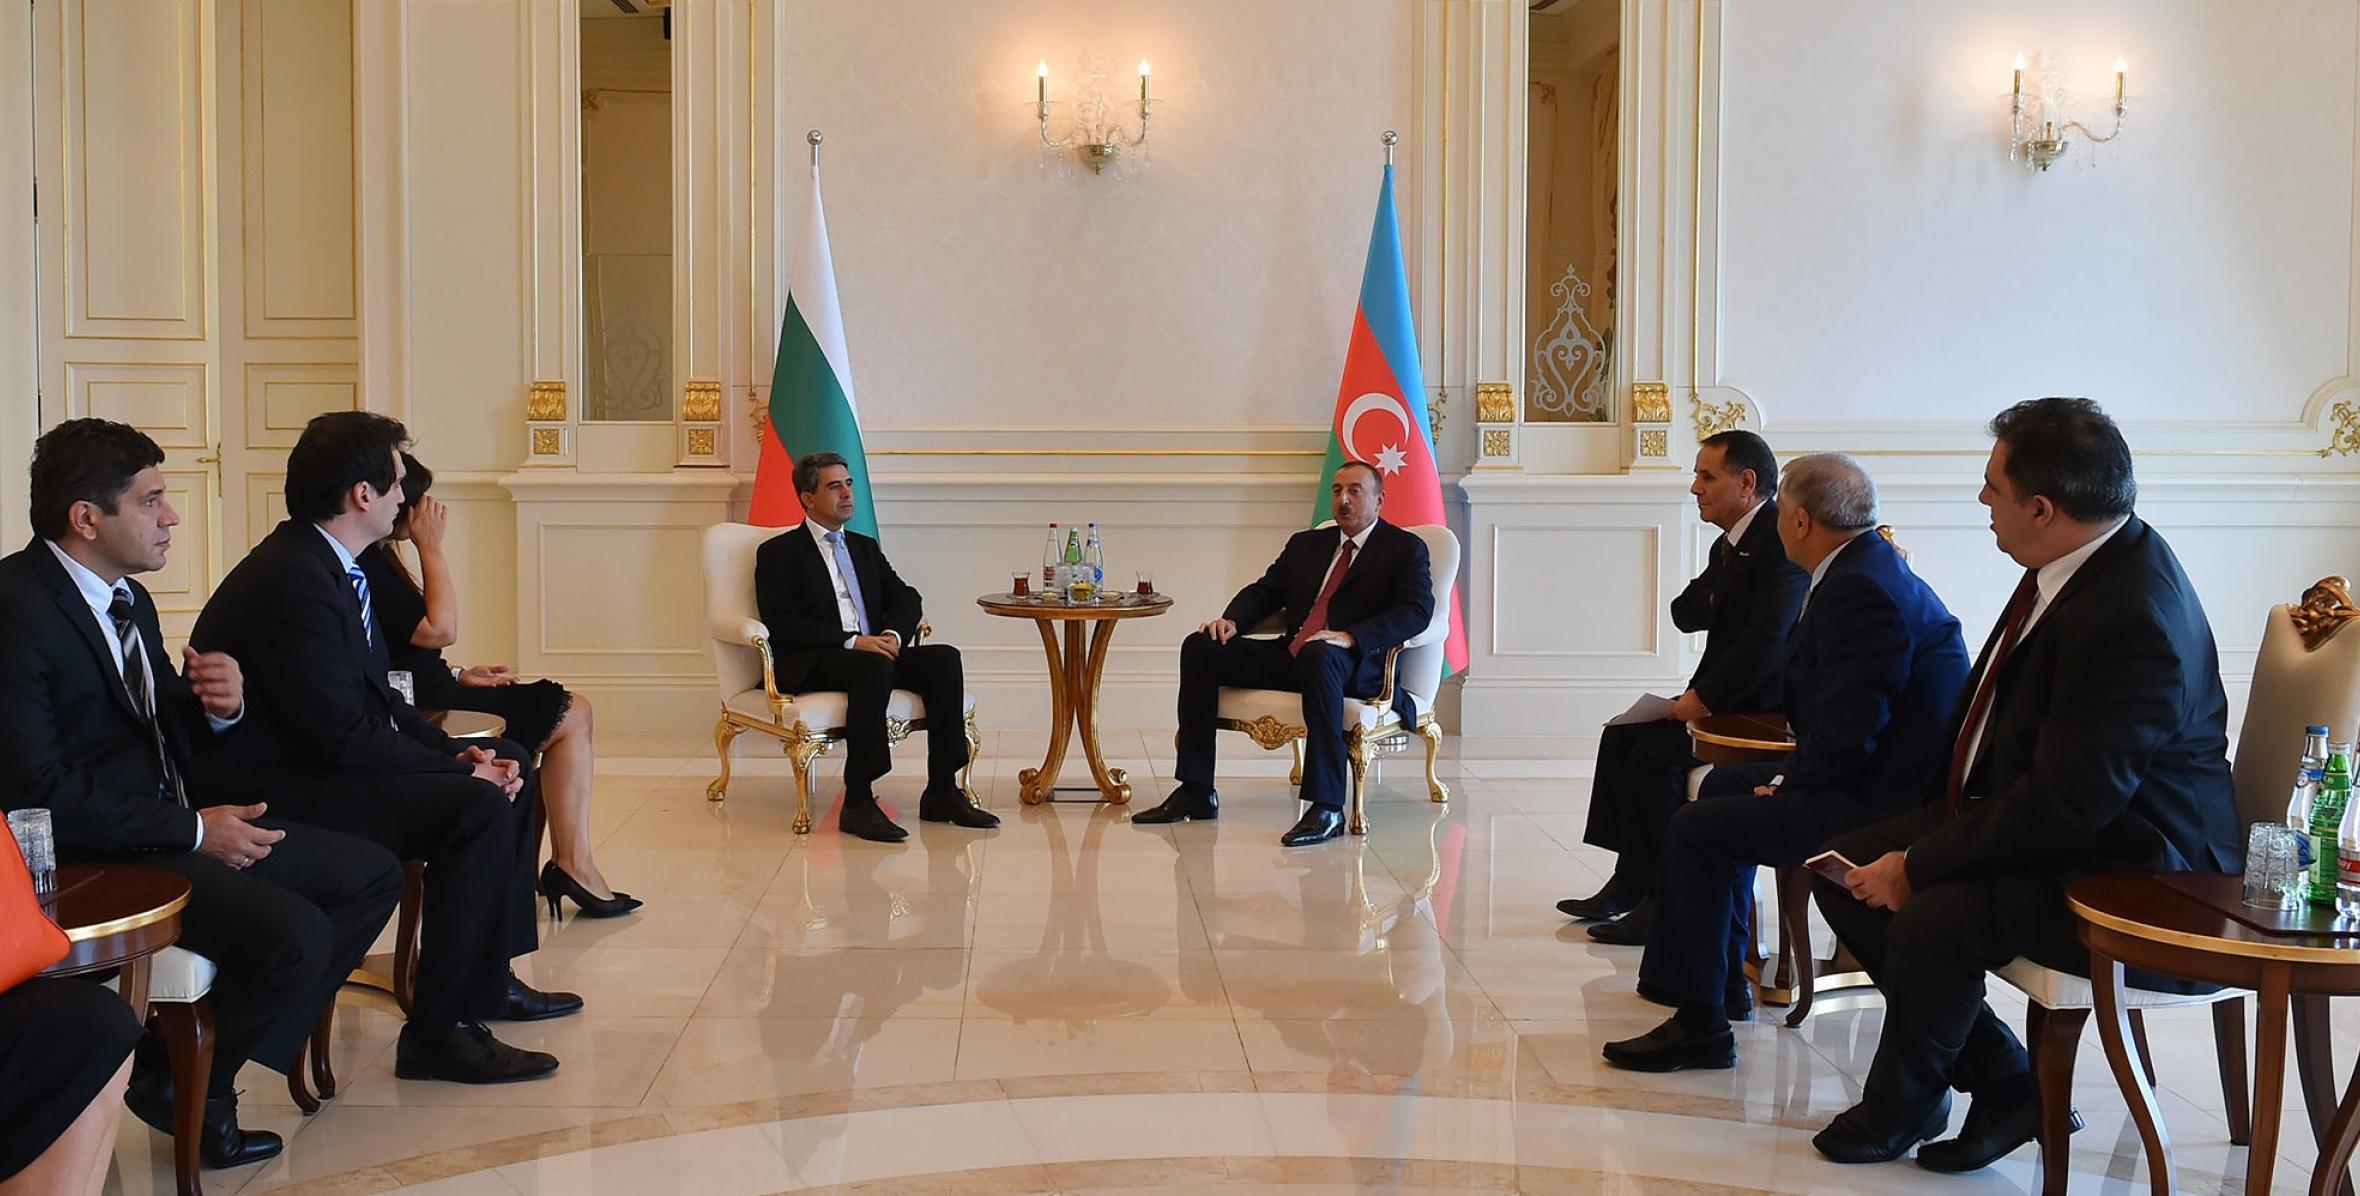 Ilham Aliyev and President of Bulgaria Rosen Plevneliev held an expanded meeting